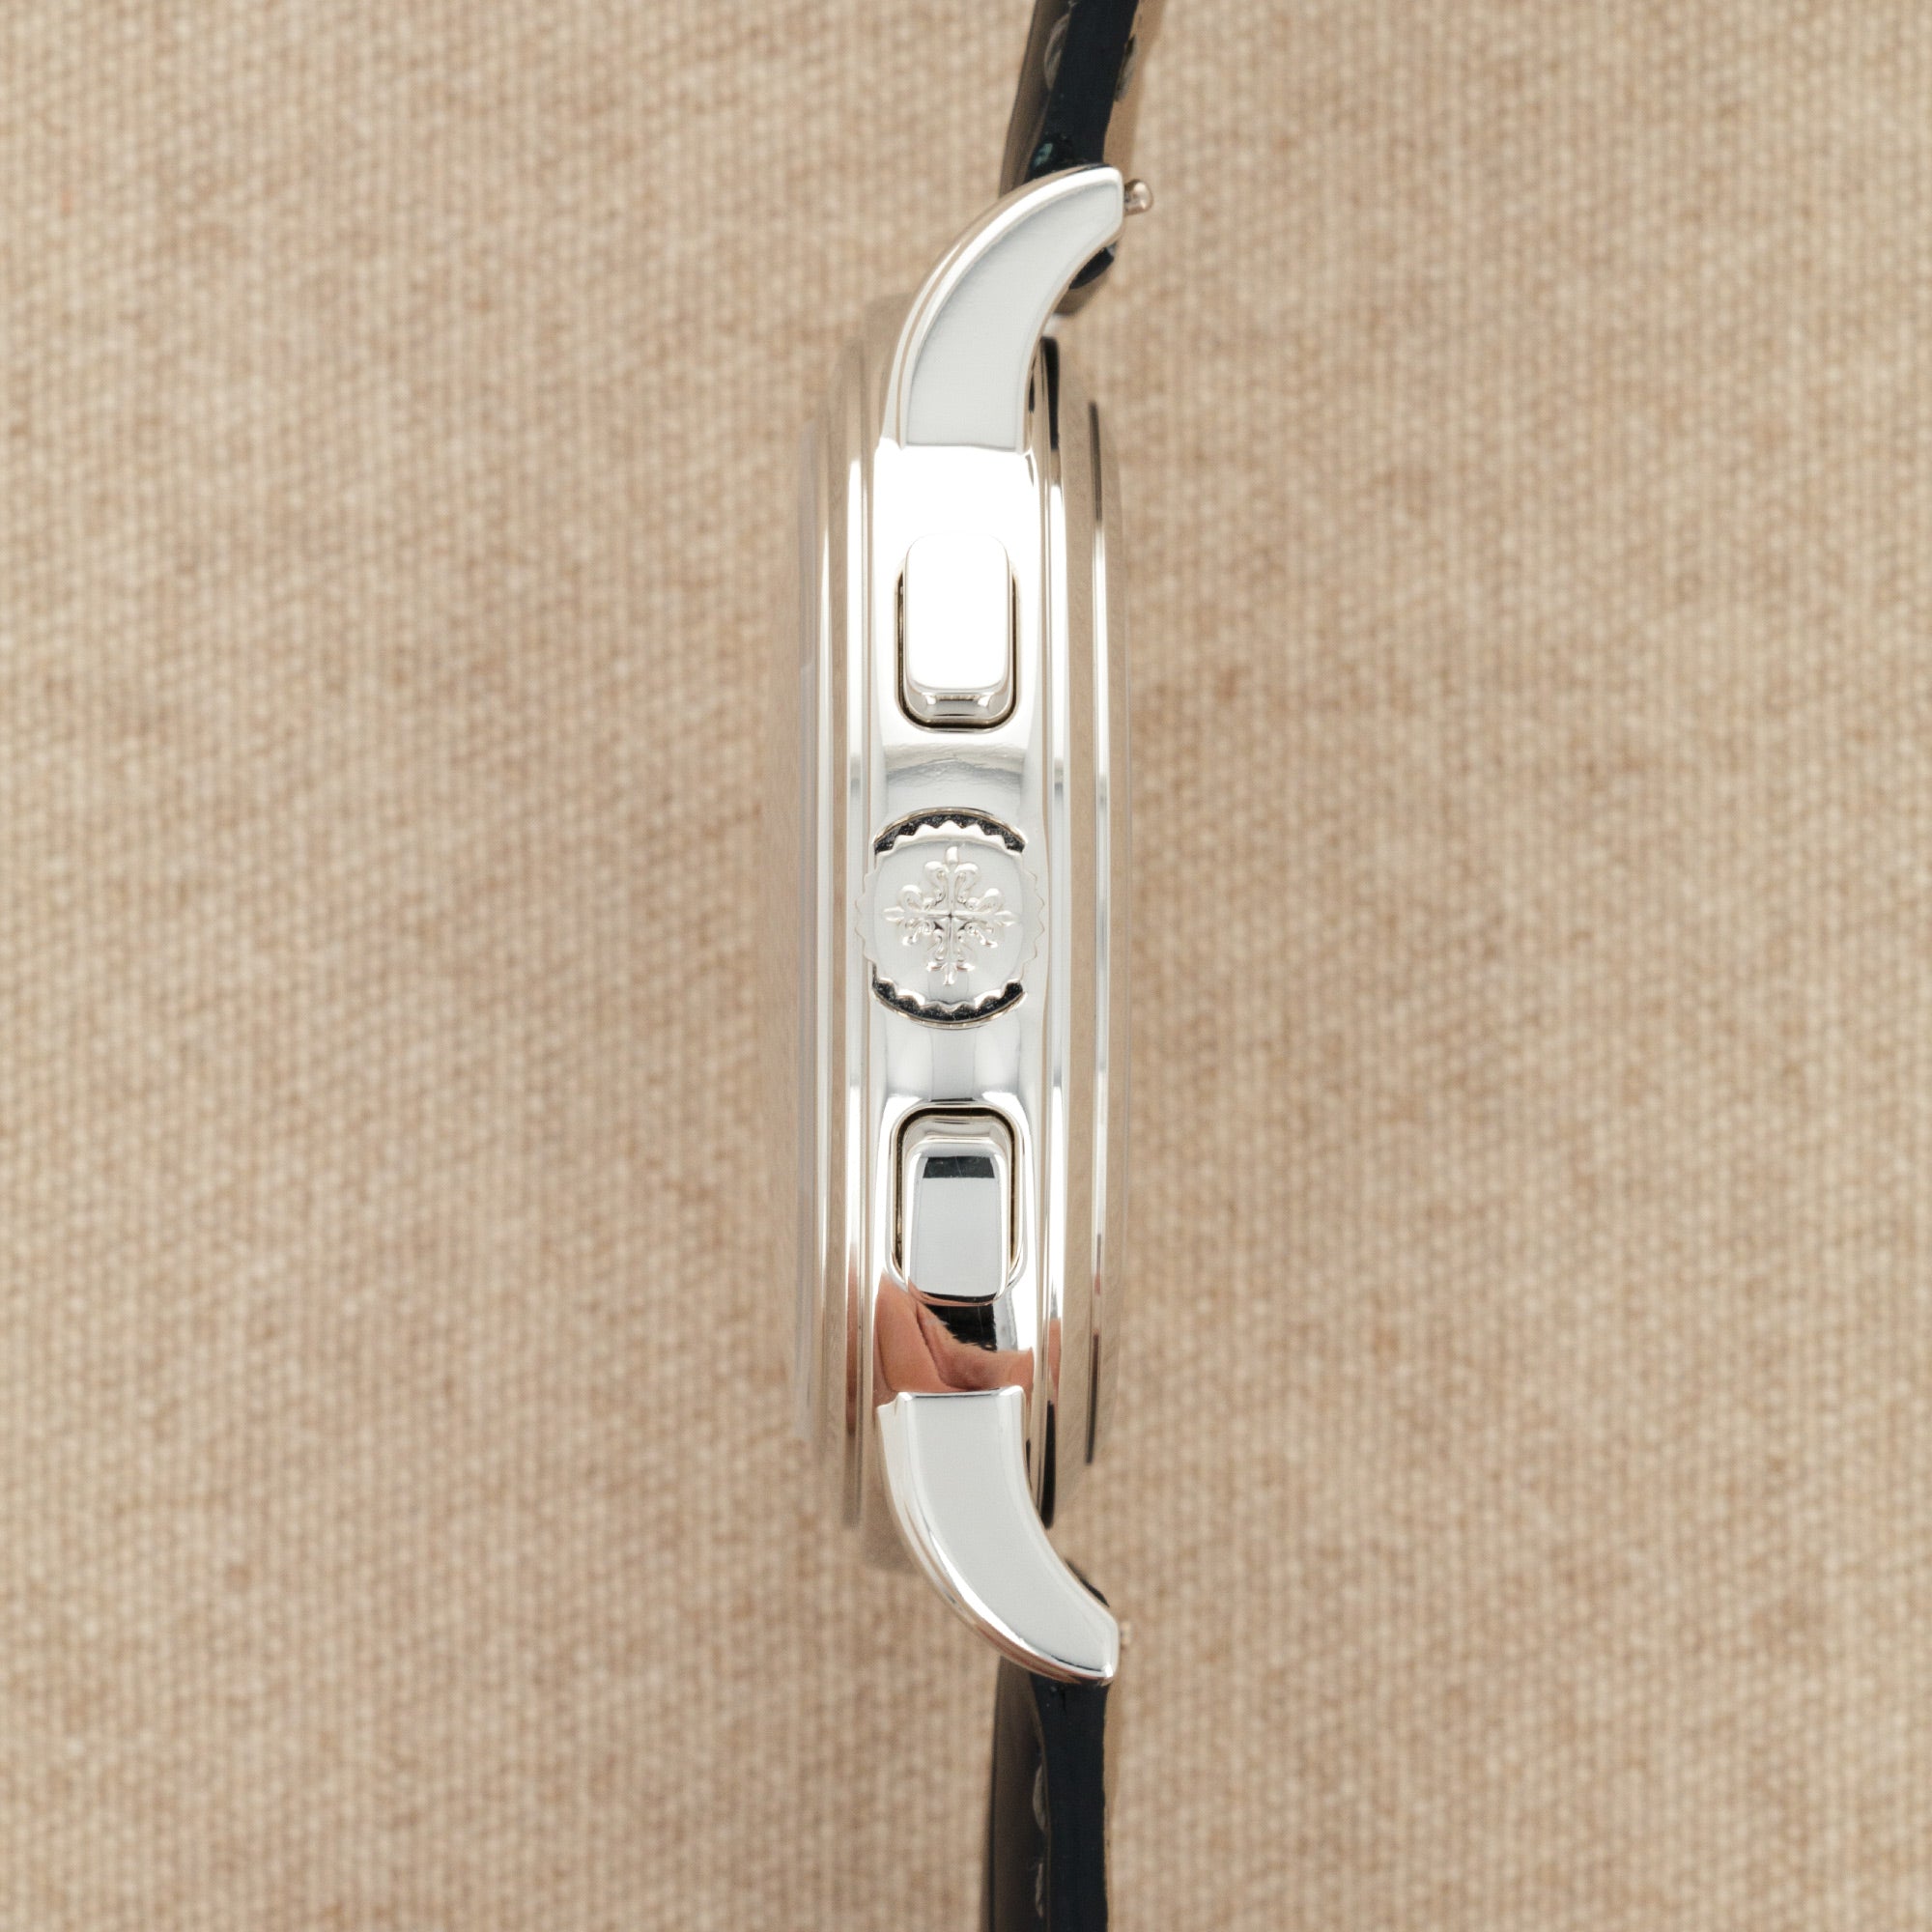 Patek Philippe - Patek Philippe Platinum Chronograph Watch Ref. 5070 - The Keystone Watches